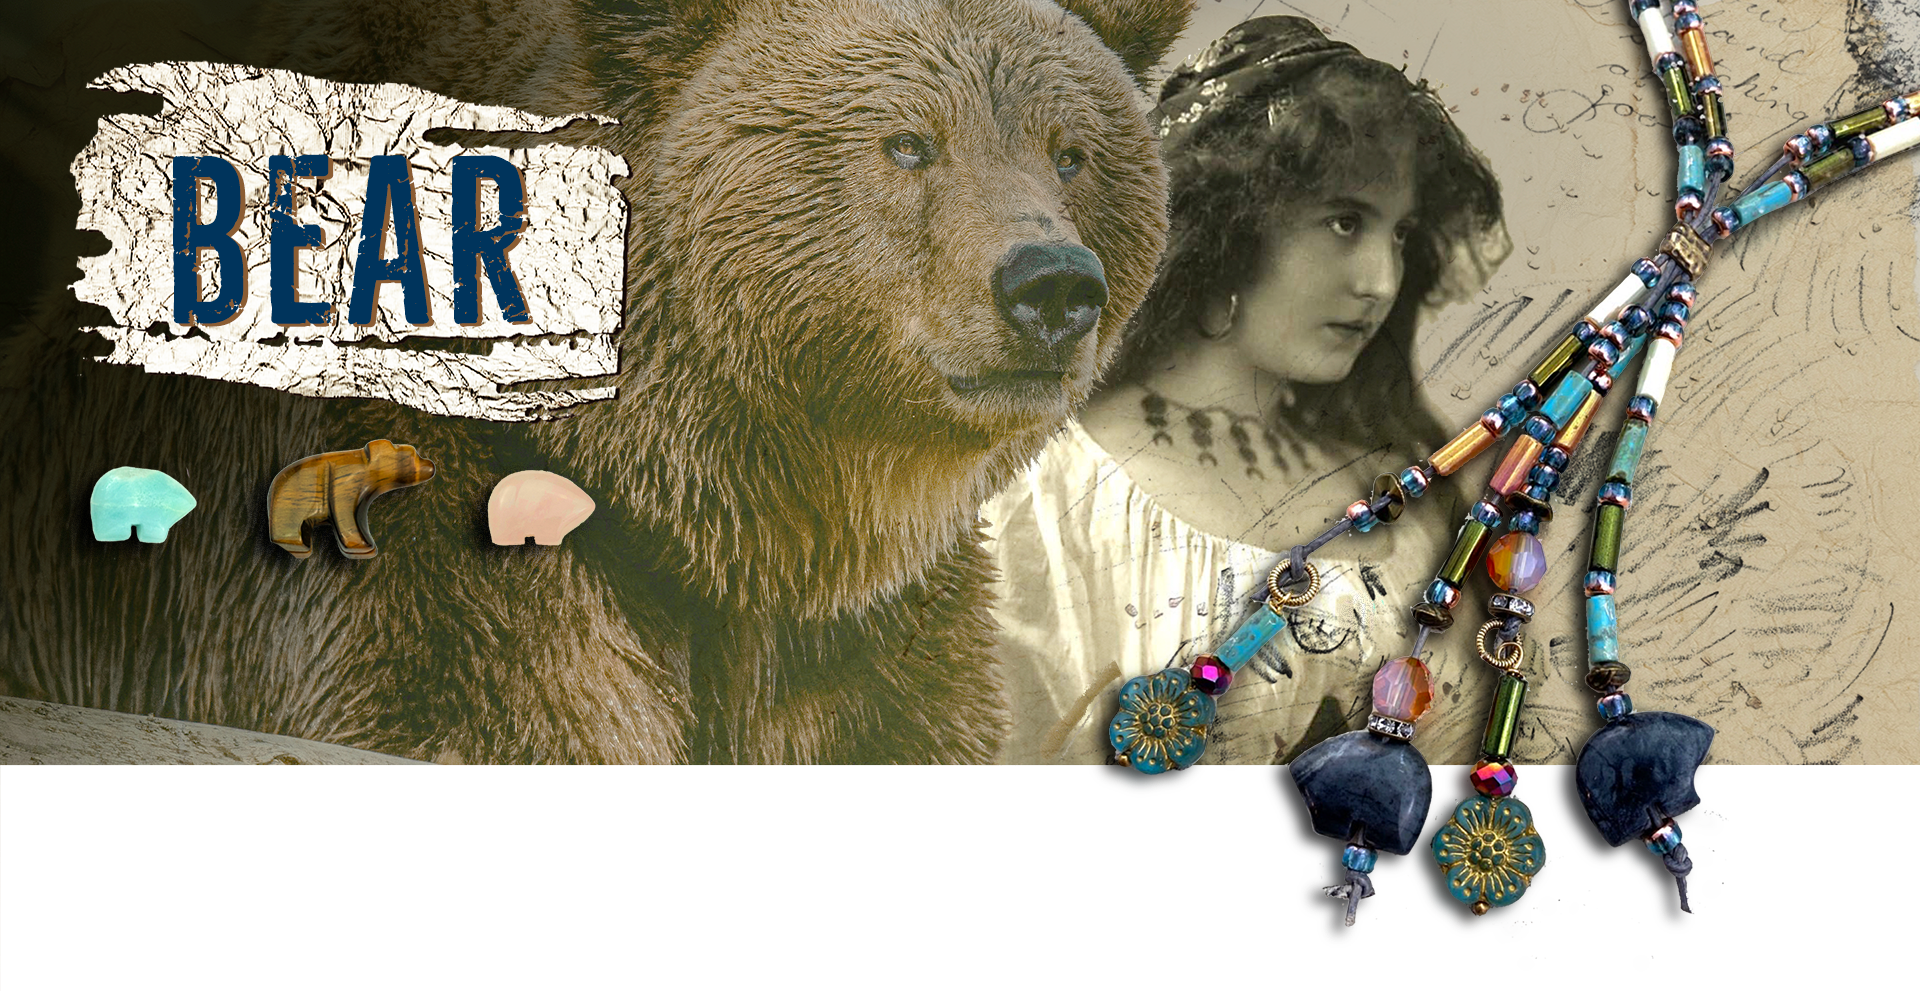 Bear | DIY Jewelry Inspiration | Nostalgica Featured Image